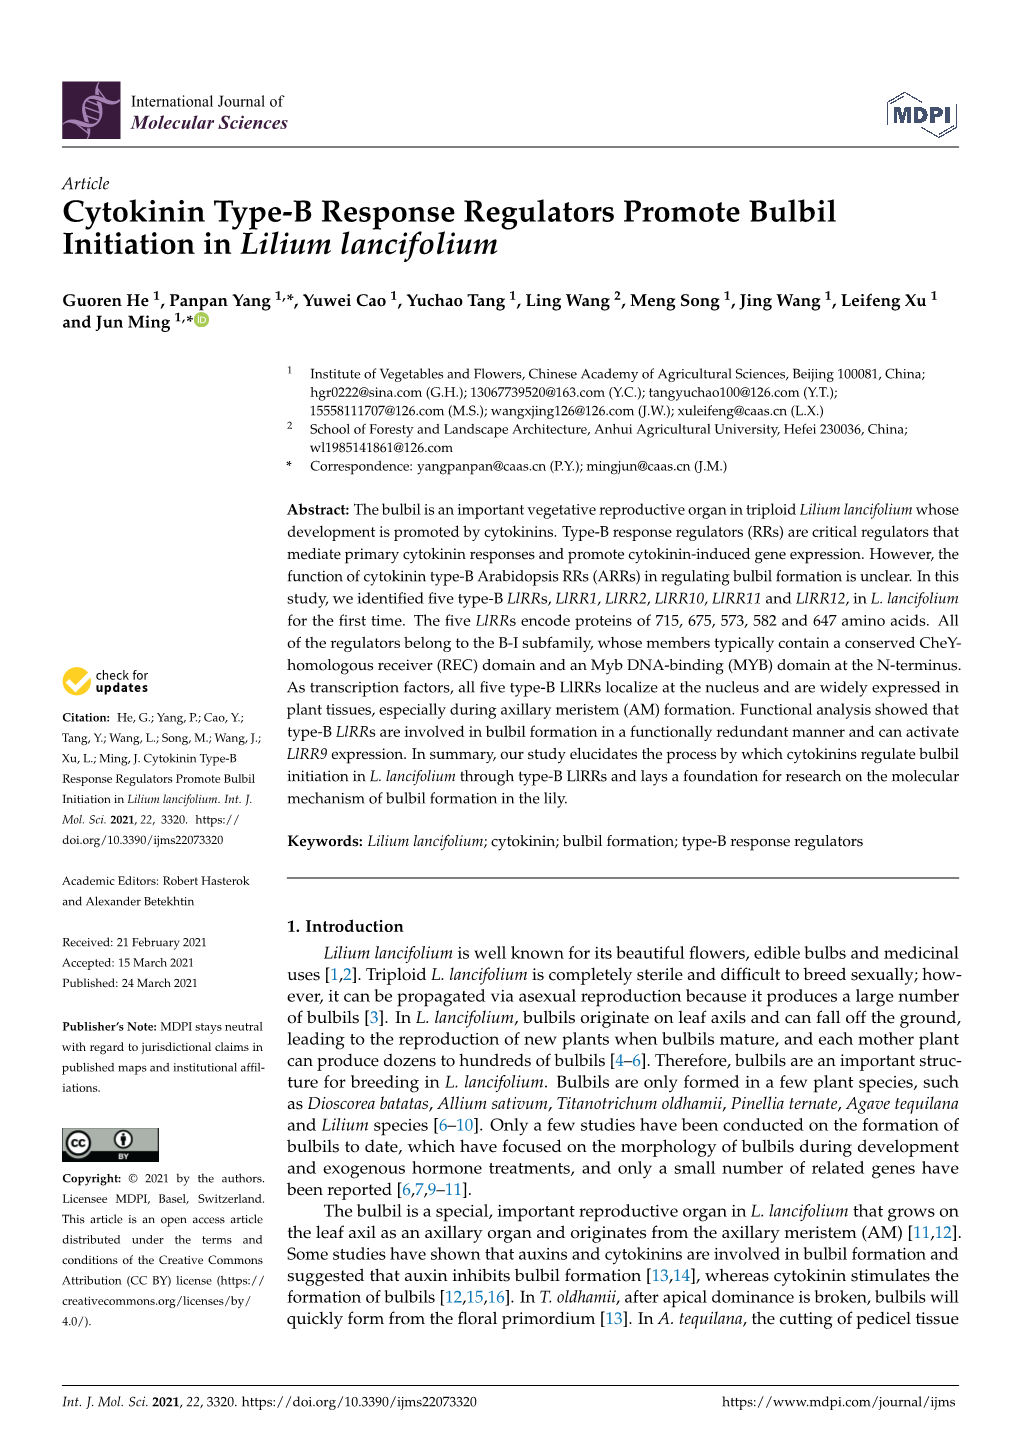 Cytokinin Type-B Response Regulators Promote Bulbil Initiation in Lilium Lancifolium